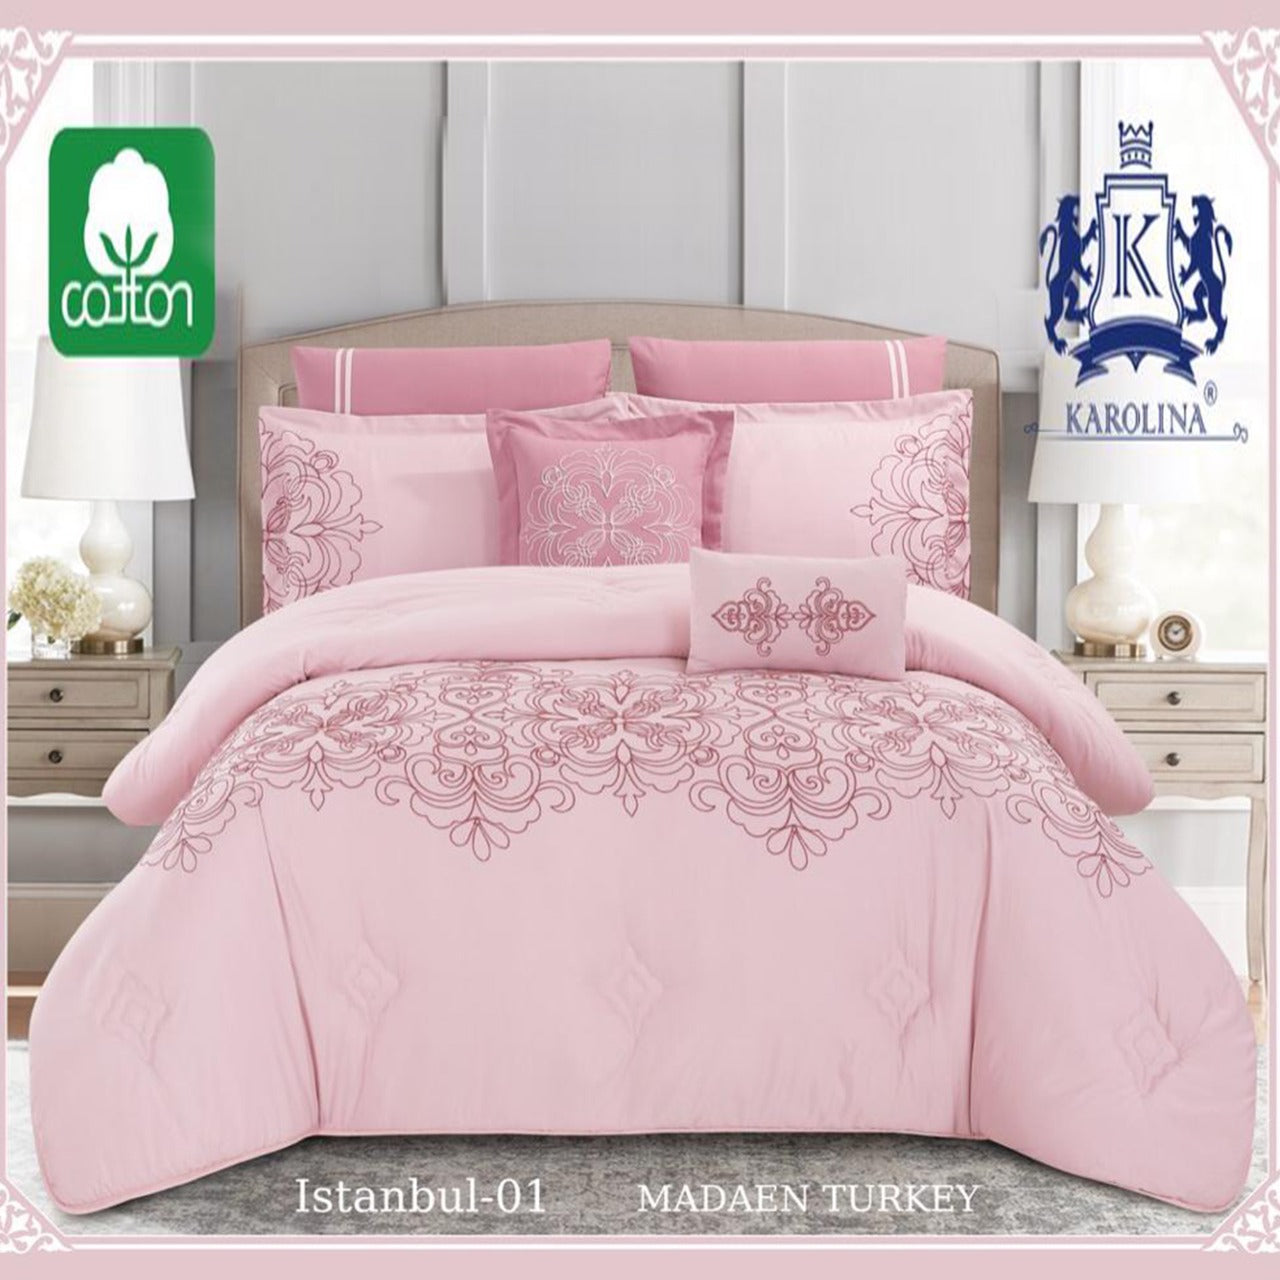 Turkey Istanbul - 01 Karolina 10 Piece Comforter Bedding with sheet and Decorative Pillow Shams | Made in Turkey Jzmir - 01